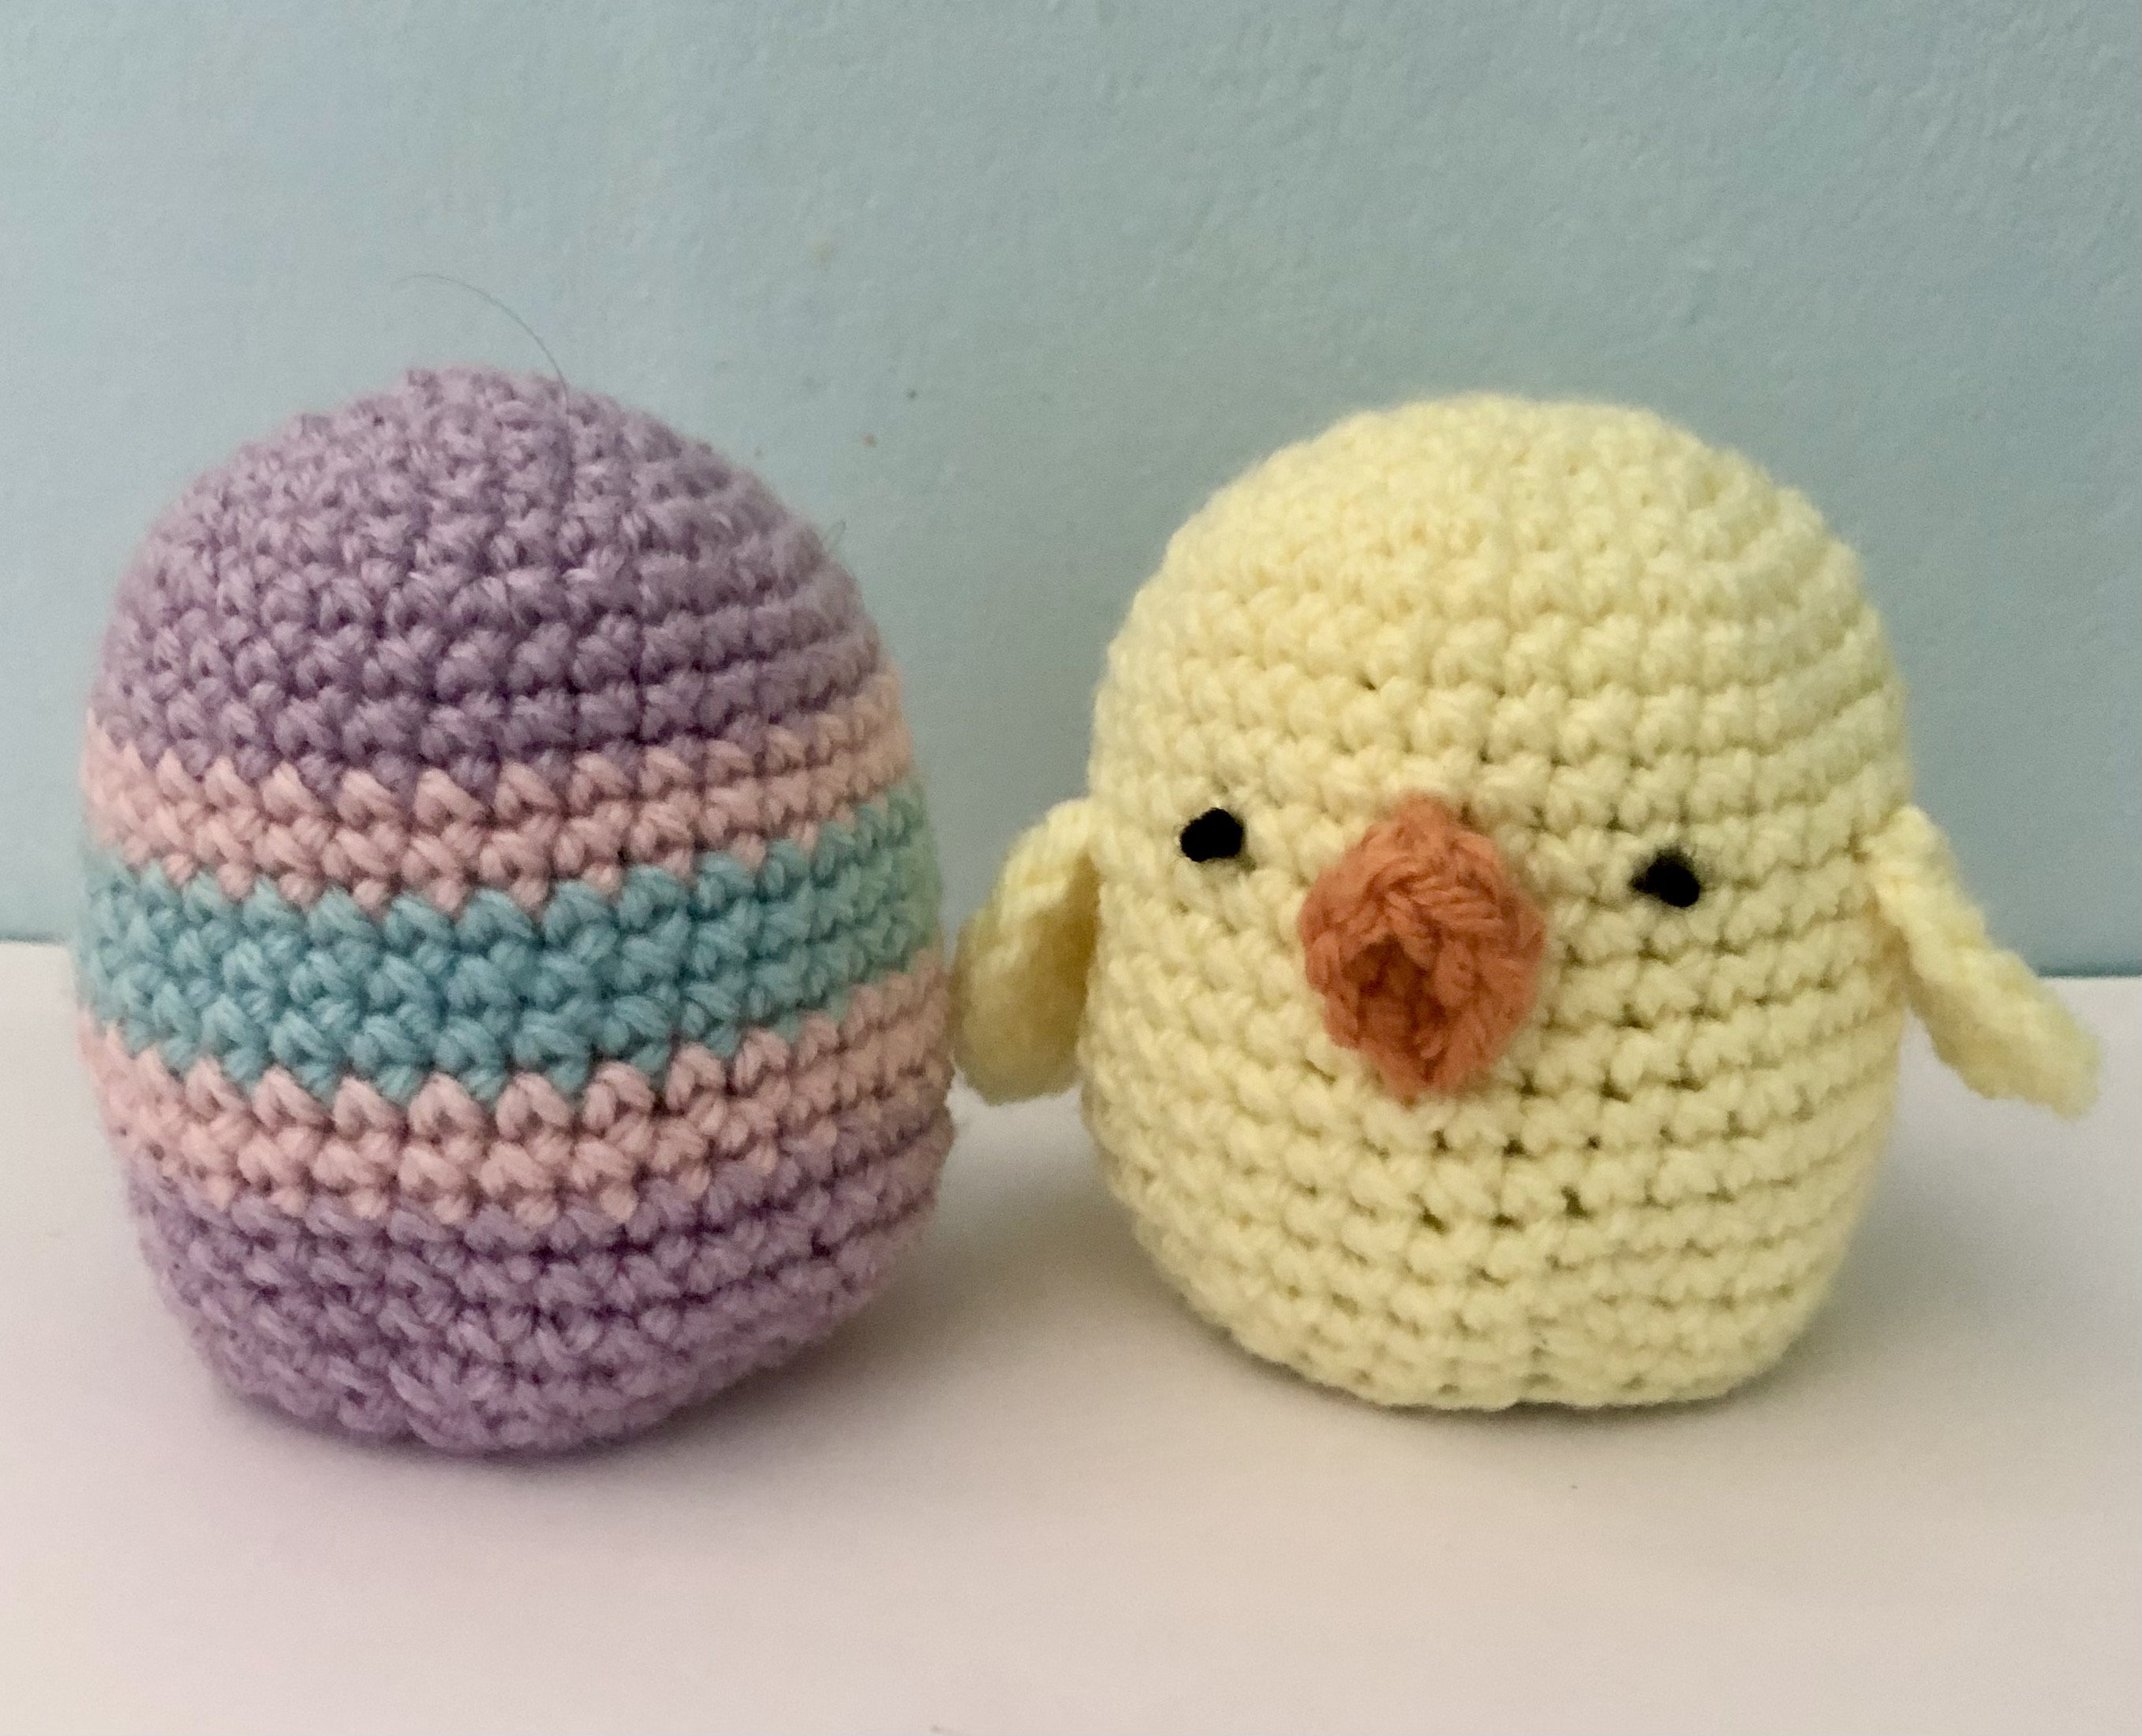 Wheel of Makes, Eggs Benedict #crochet #amigurumi #stitchintogether #yarn 